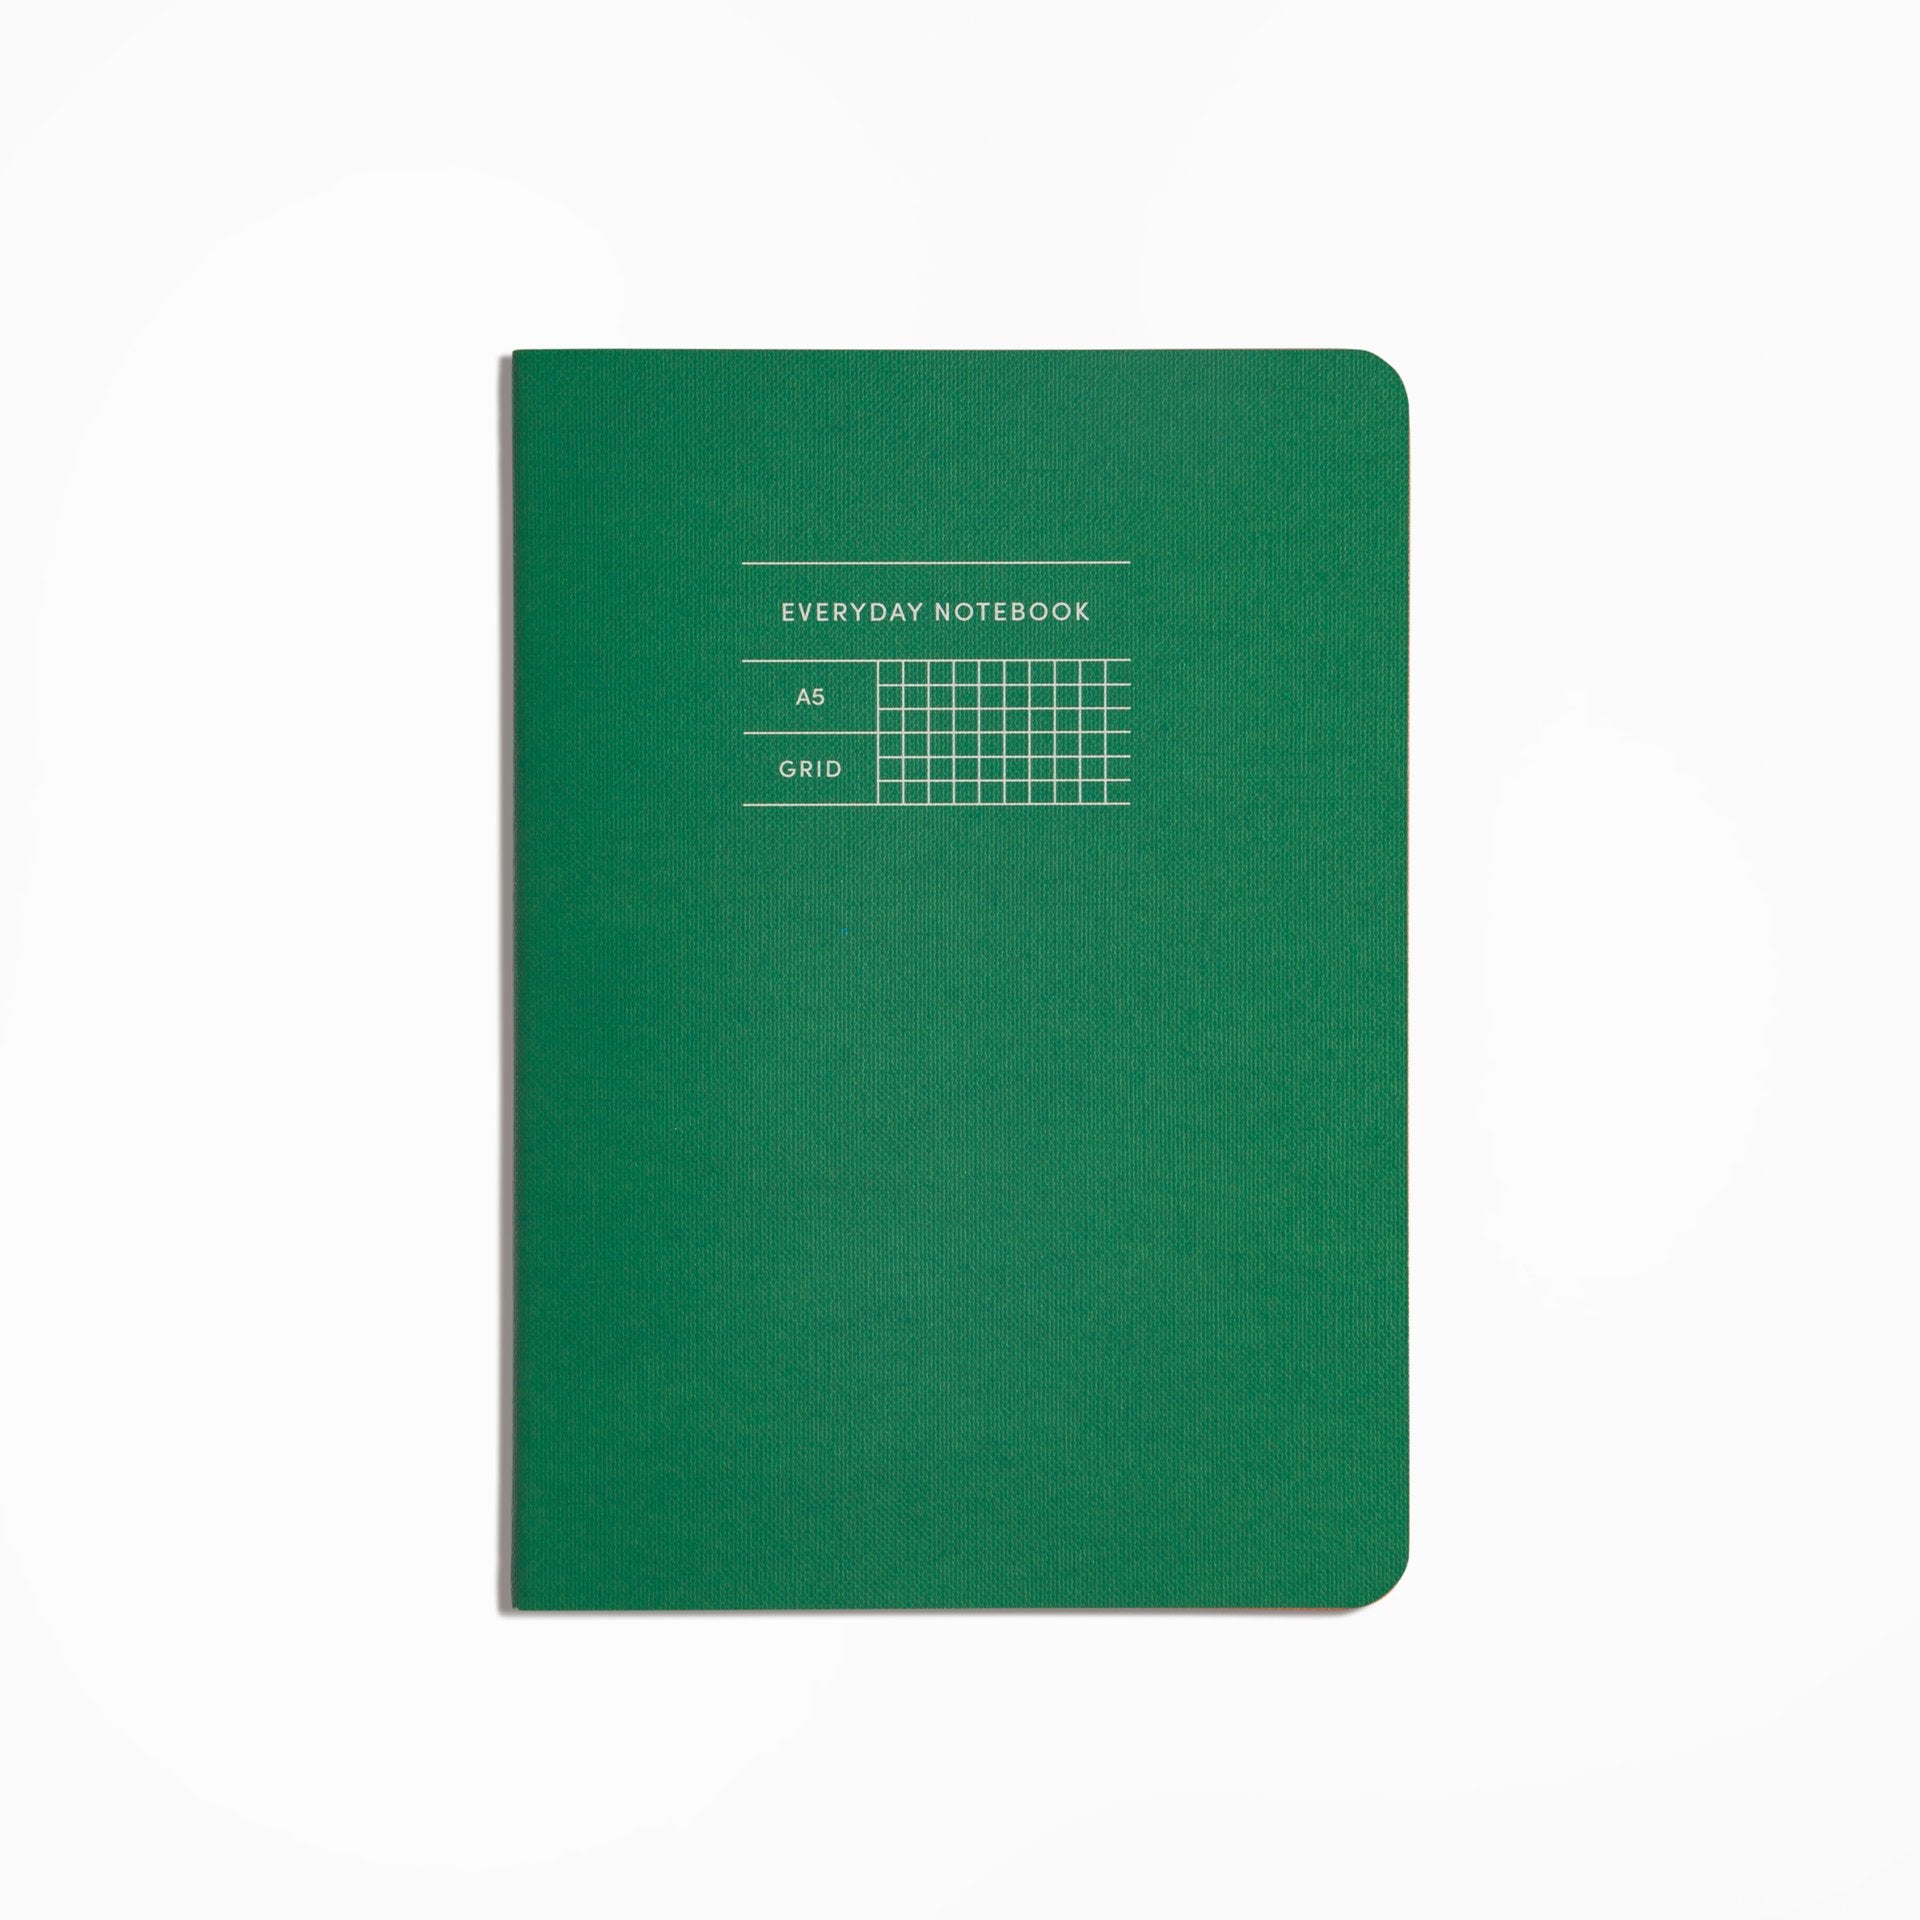 Poketo Everyday Notebook in Grid